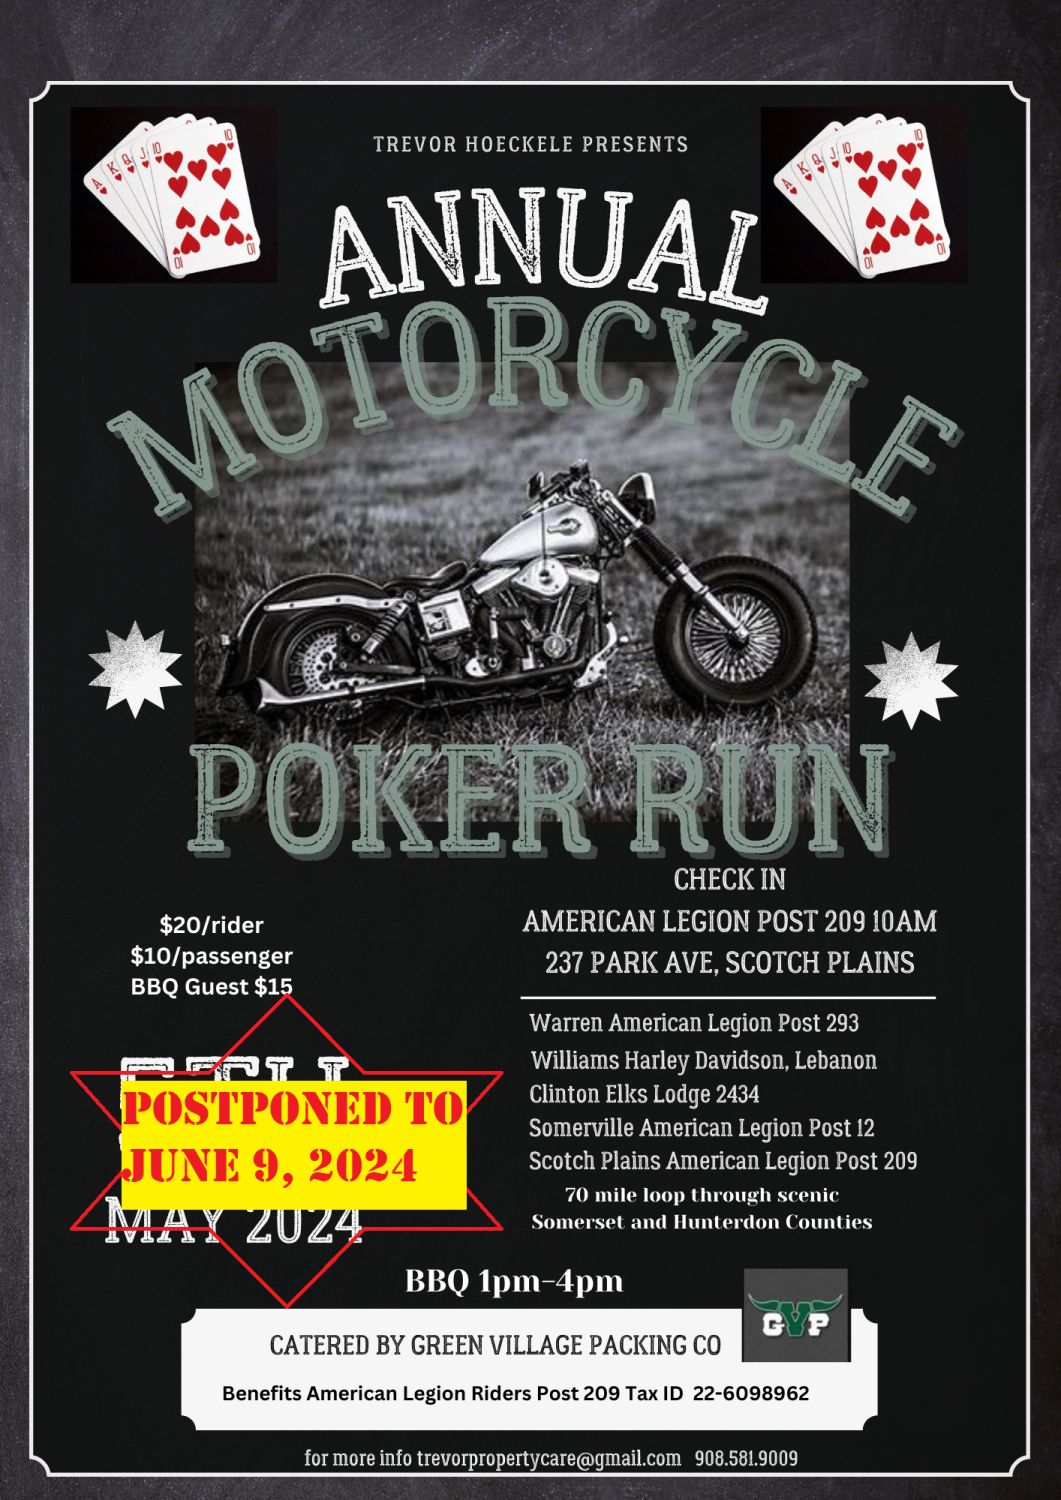 Annual Poker Run & BBQ- POSTPONED TO JUNE 9, 2024